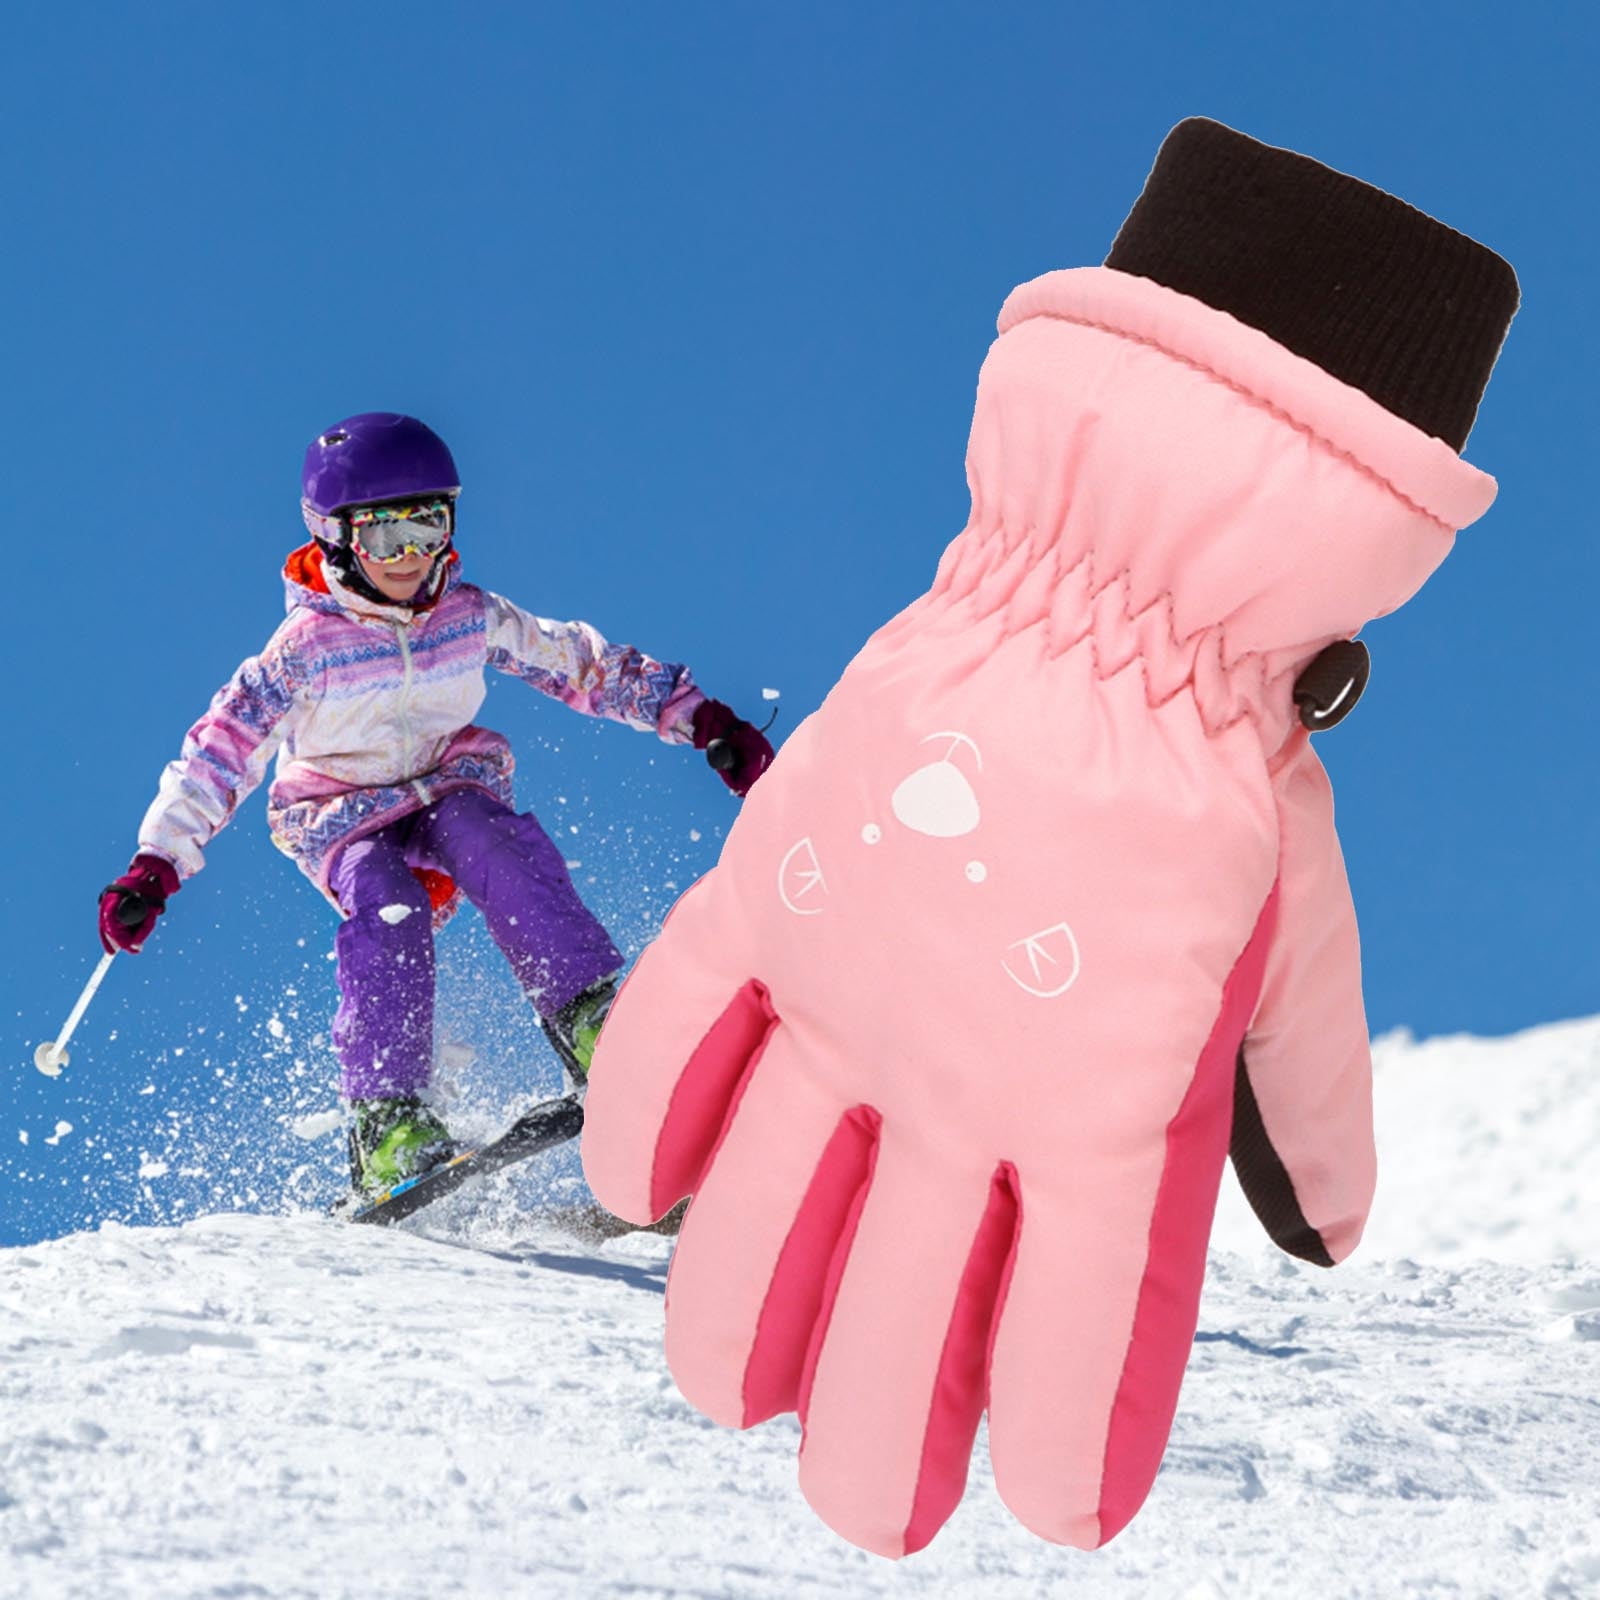 ASFGIMUJ Toddler Snow Gloves Winter Kids Warm Gloves Full Fingers Stretchy  Knitted Ski Gloves 